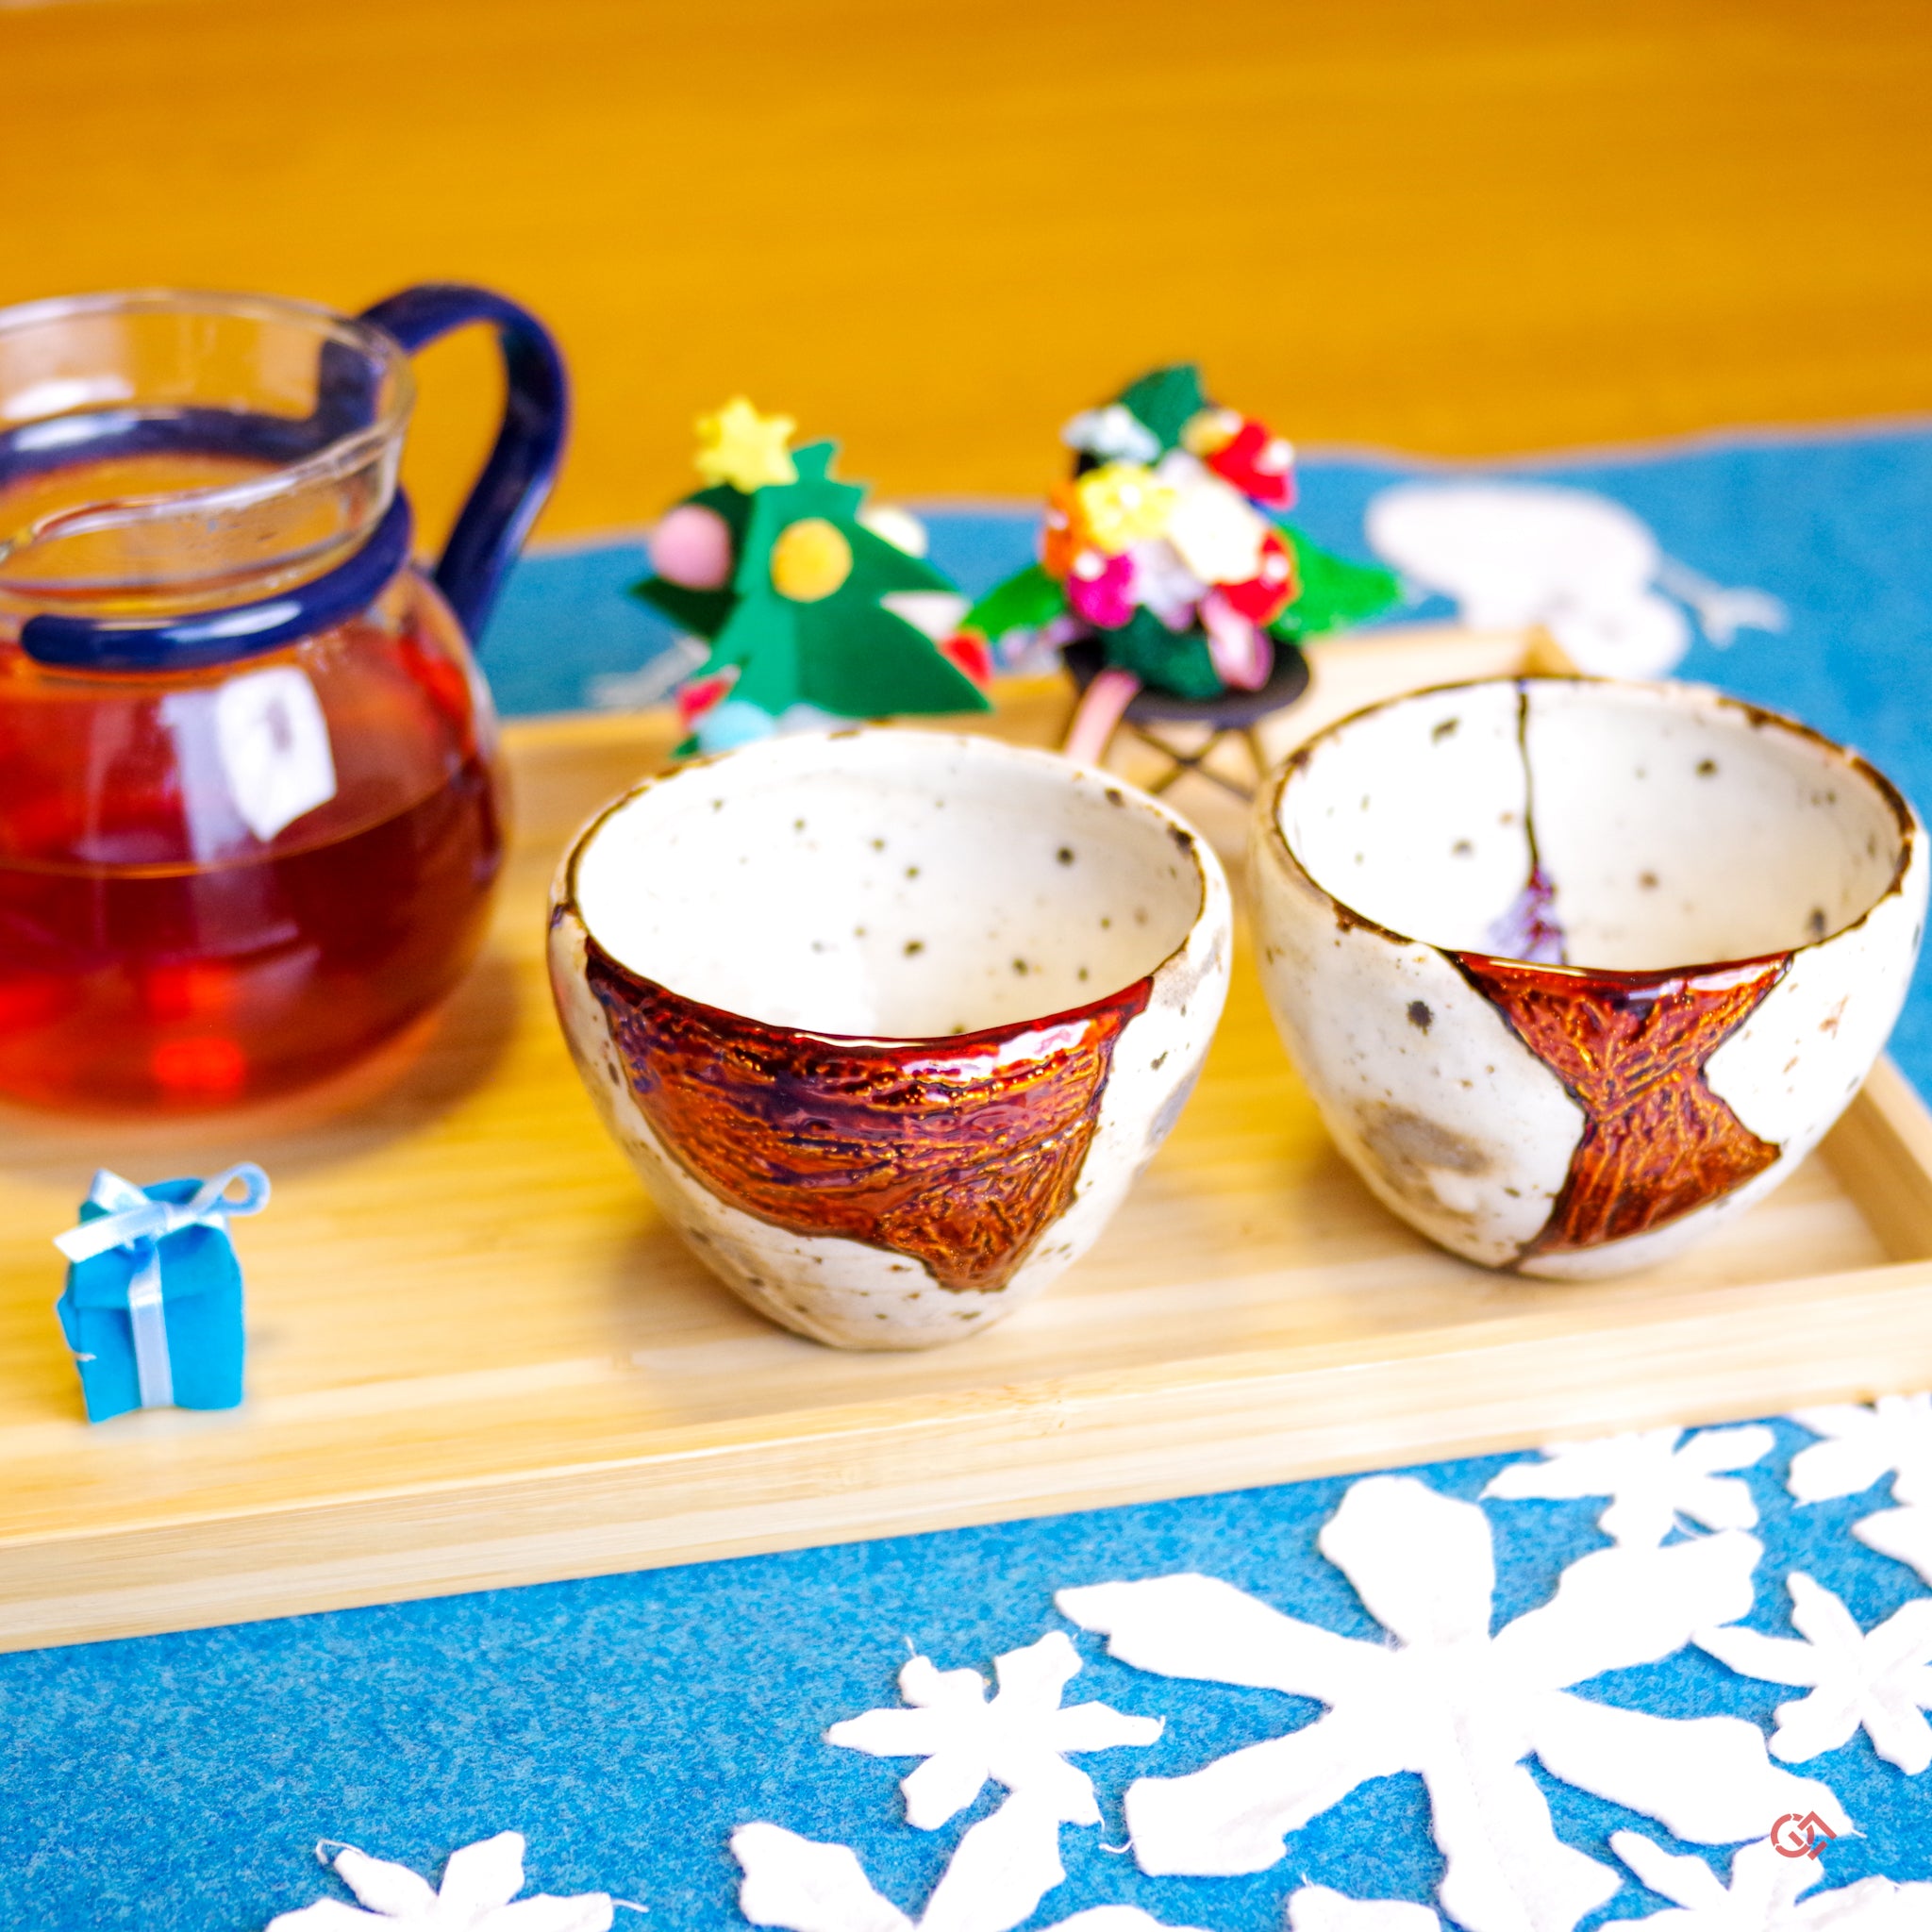 Kintsugi Supplies from Japan, Authentic Traditional Kintsugi Kit